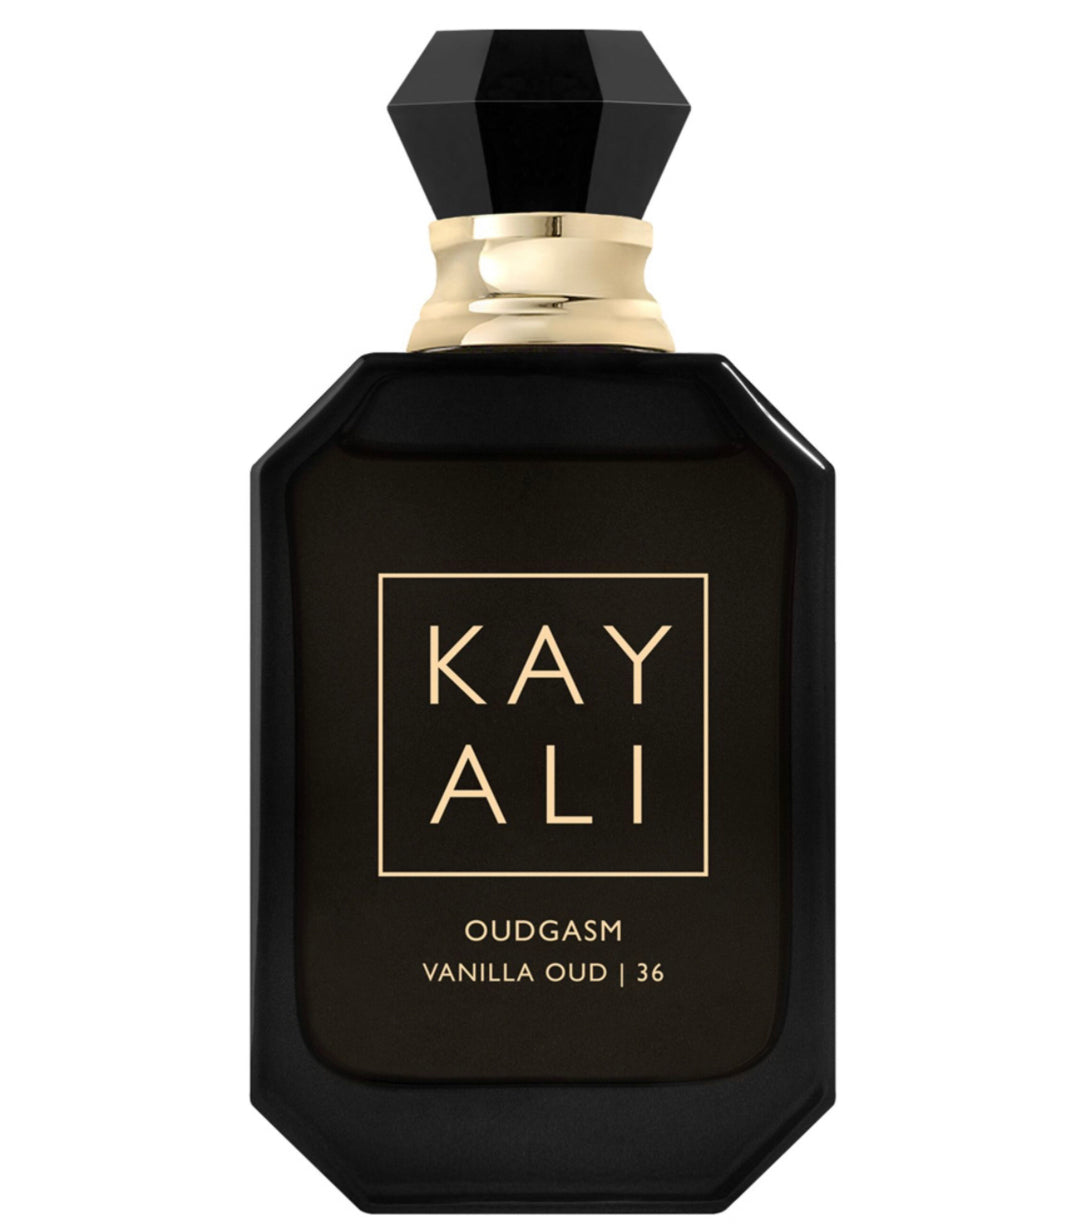 KAYALI Oudgasm Vanilla Oud 36 NEW RELEASE 2023!! Eau De Parfum Samples